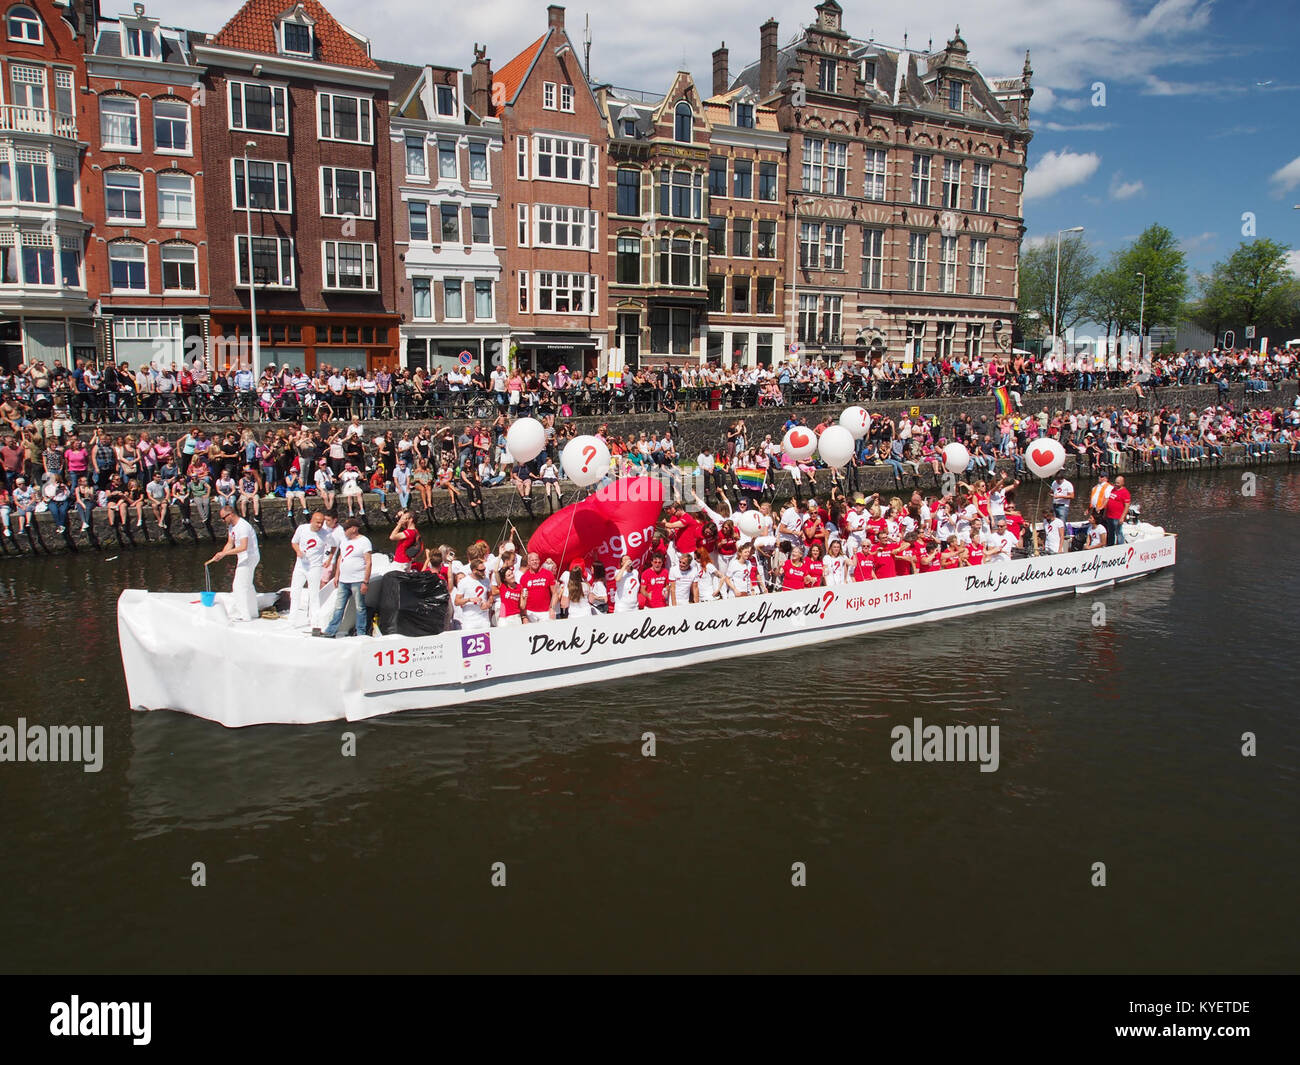 Voile 25113 DEnk je wel k aan zelfmoord, Canal Amsterdam 2017 Parade foto 4 Banque D'Images